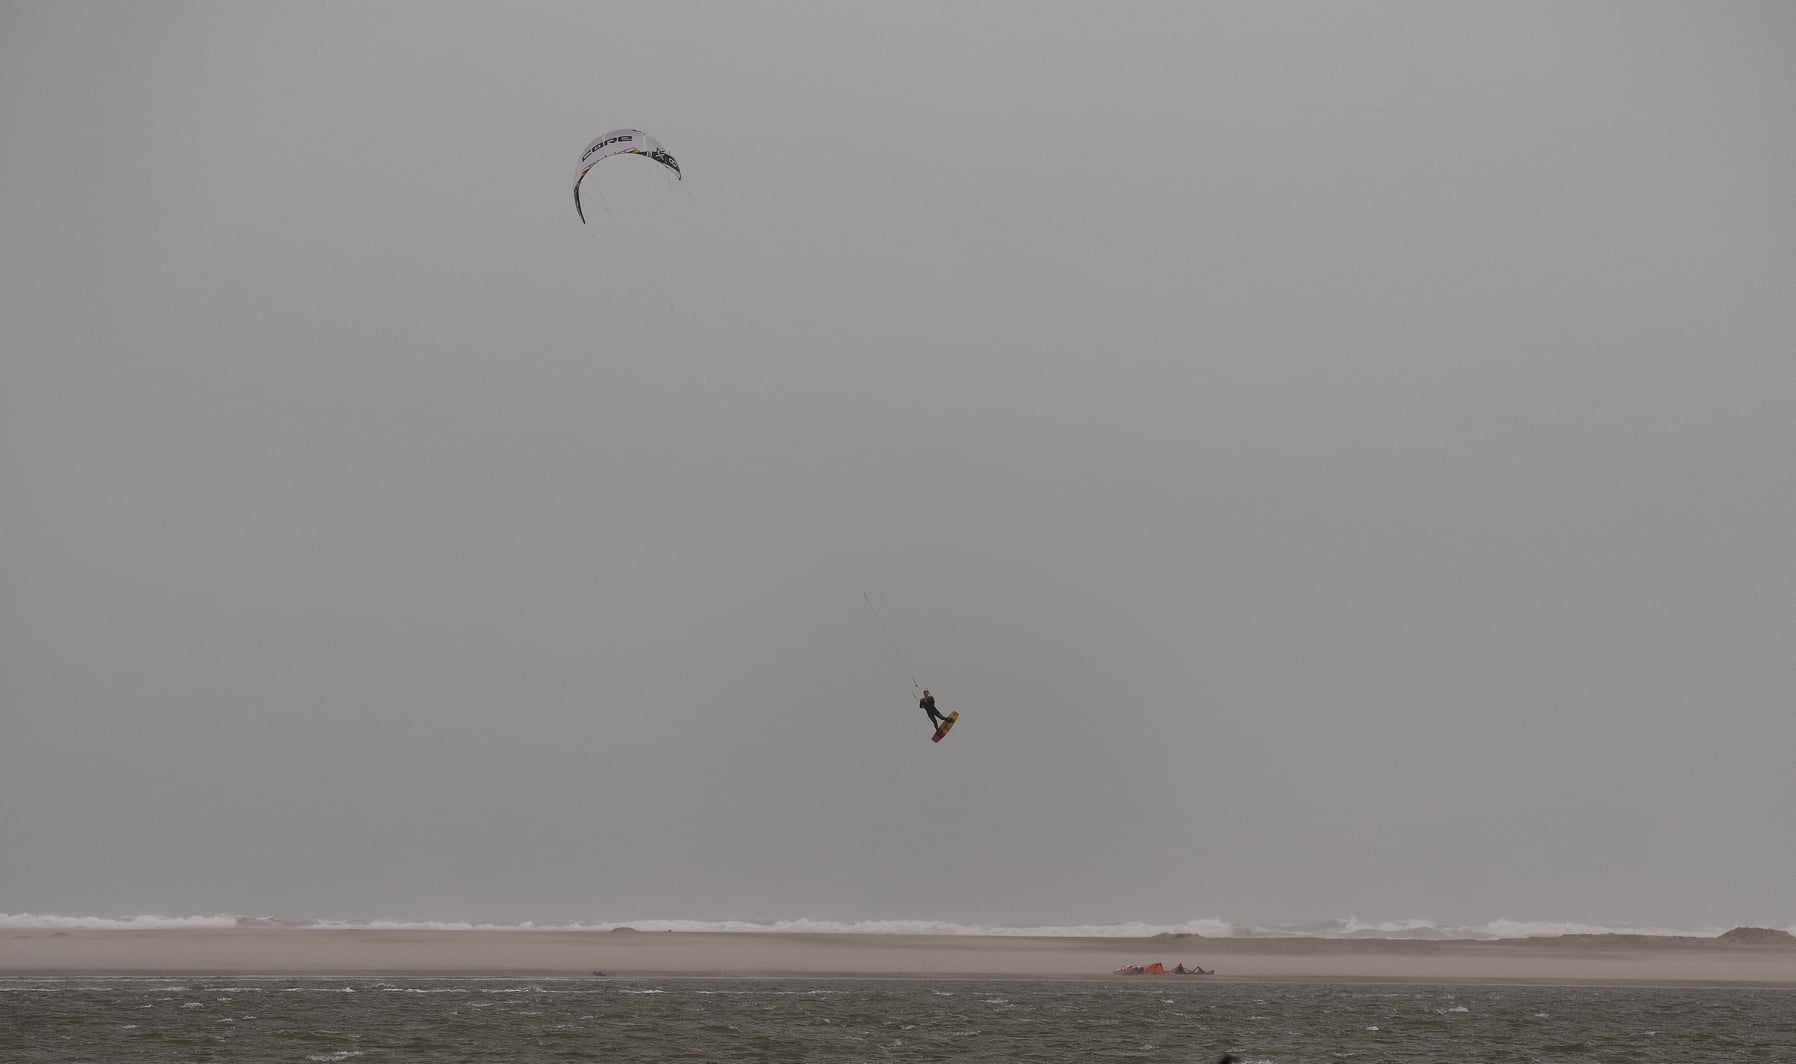 Kite surfers in action at the Zandmotor kite spot. Photo: Patrick van der Ven